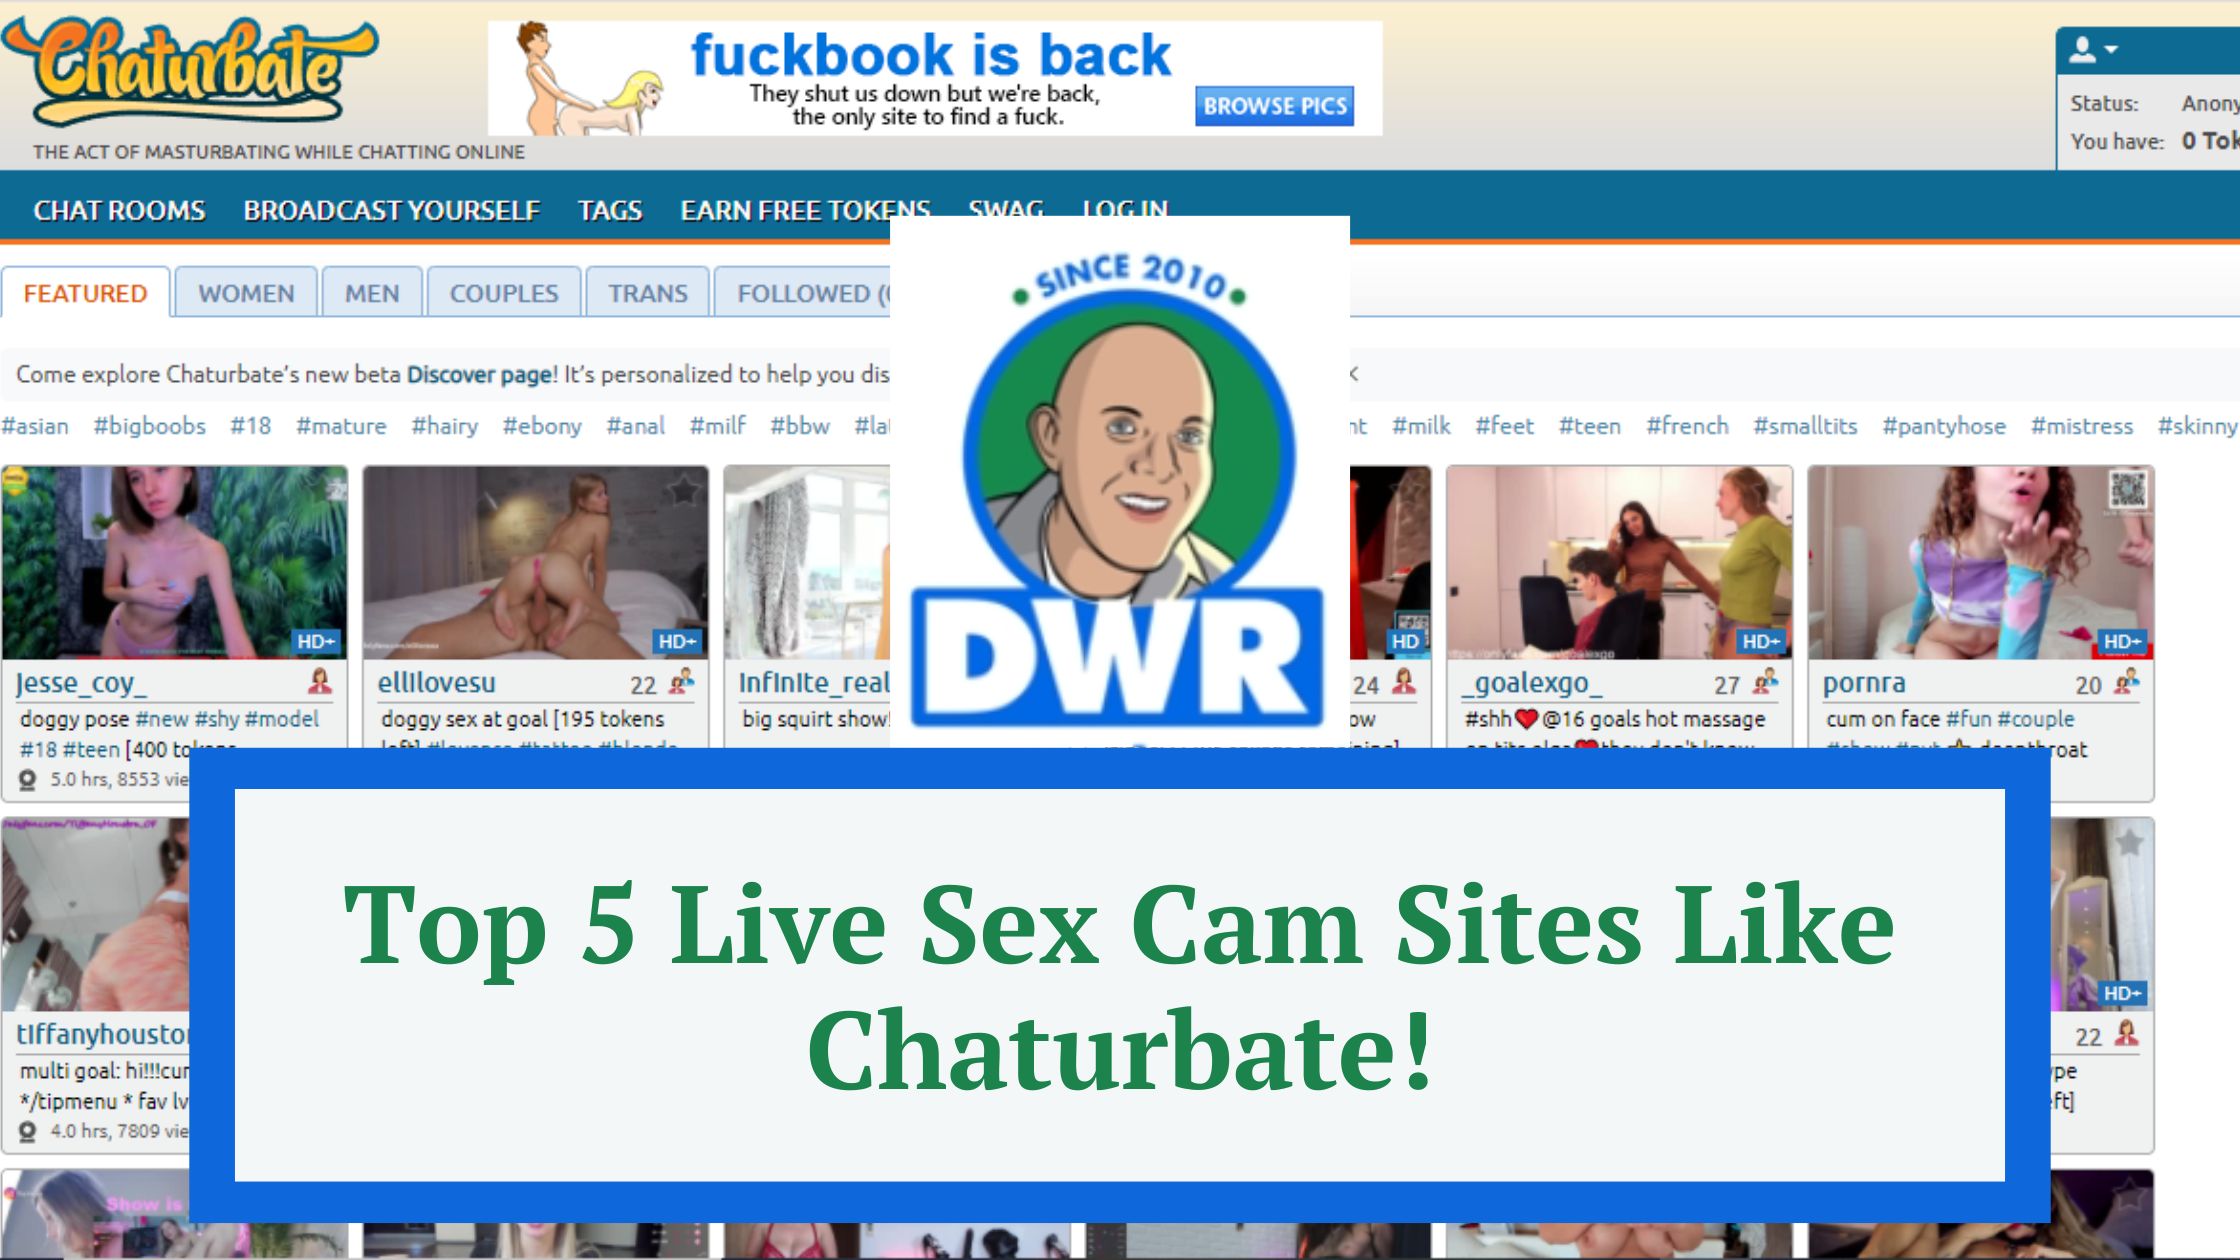 dina krull share broadcast yourself sex cam photos